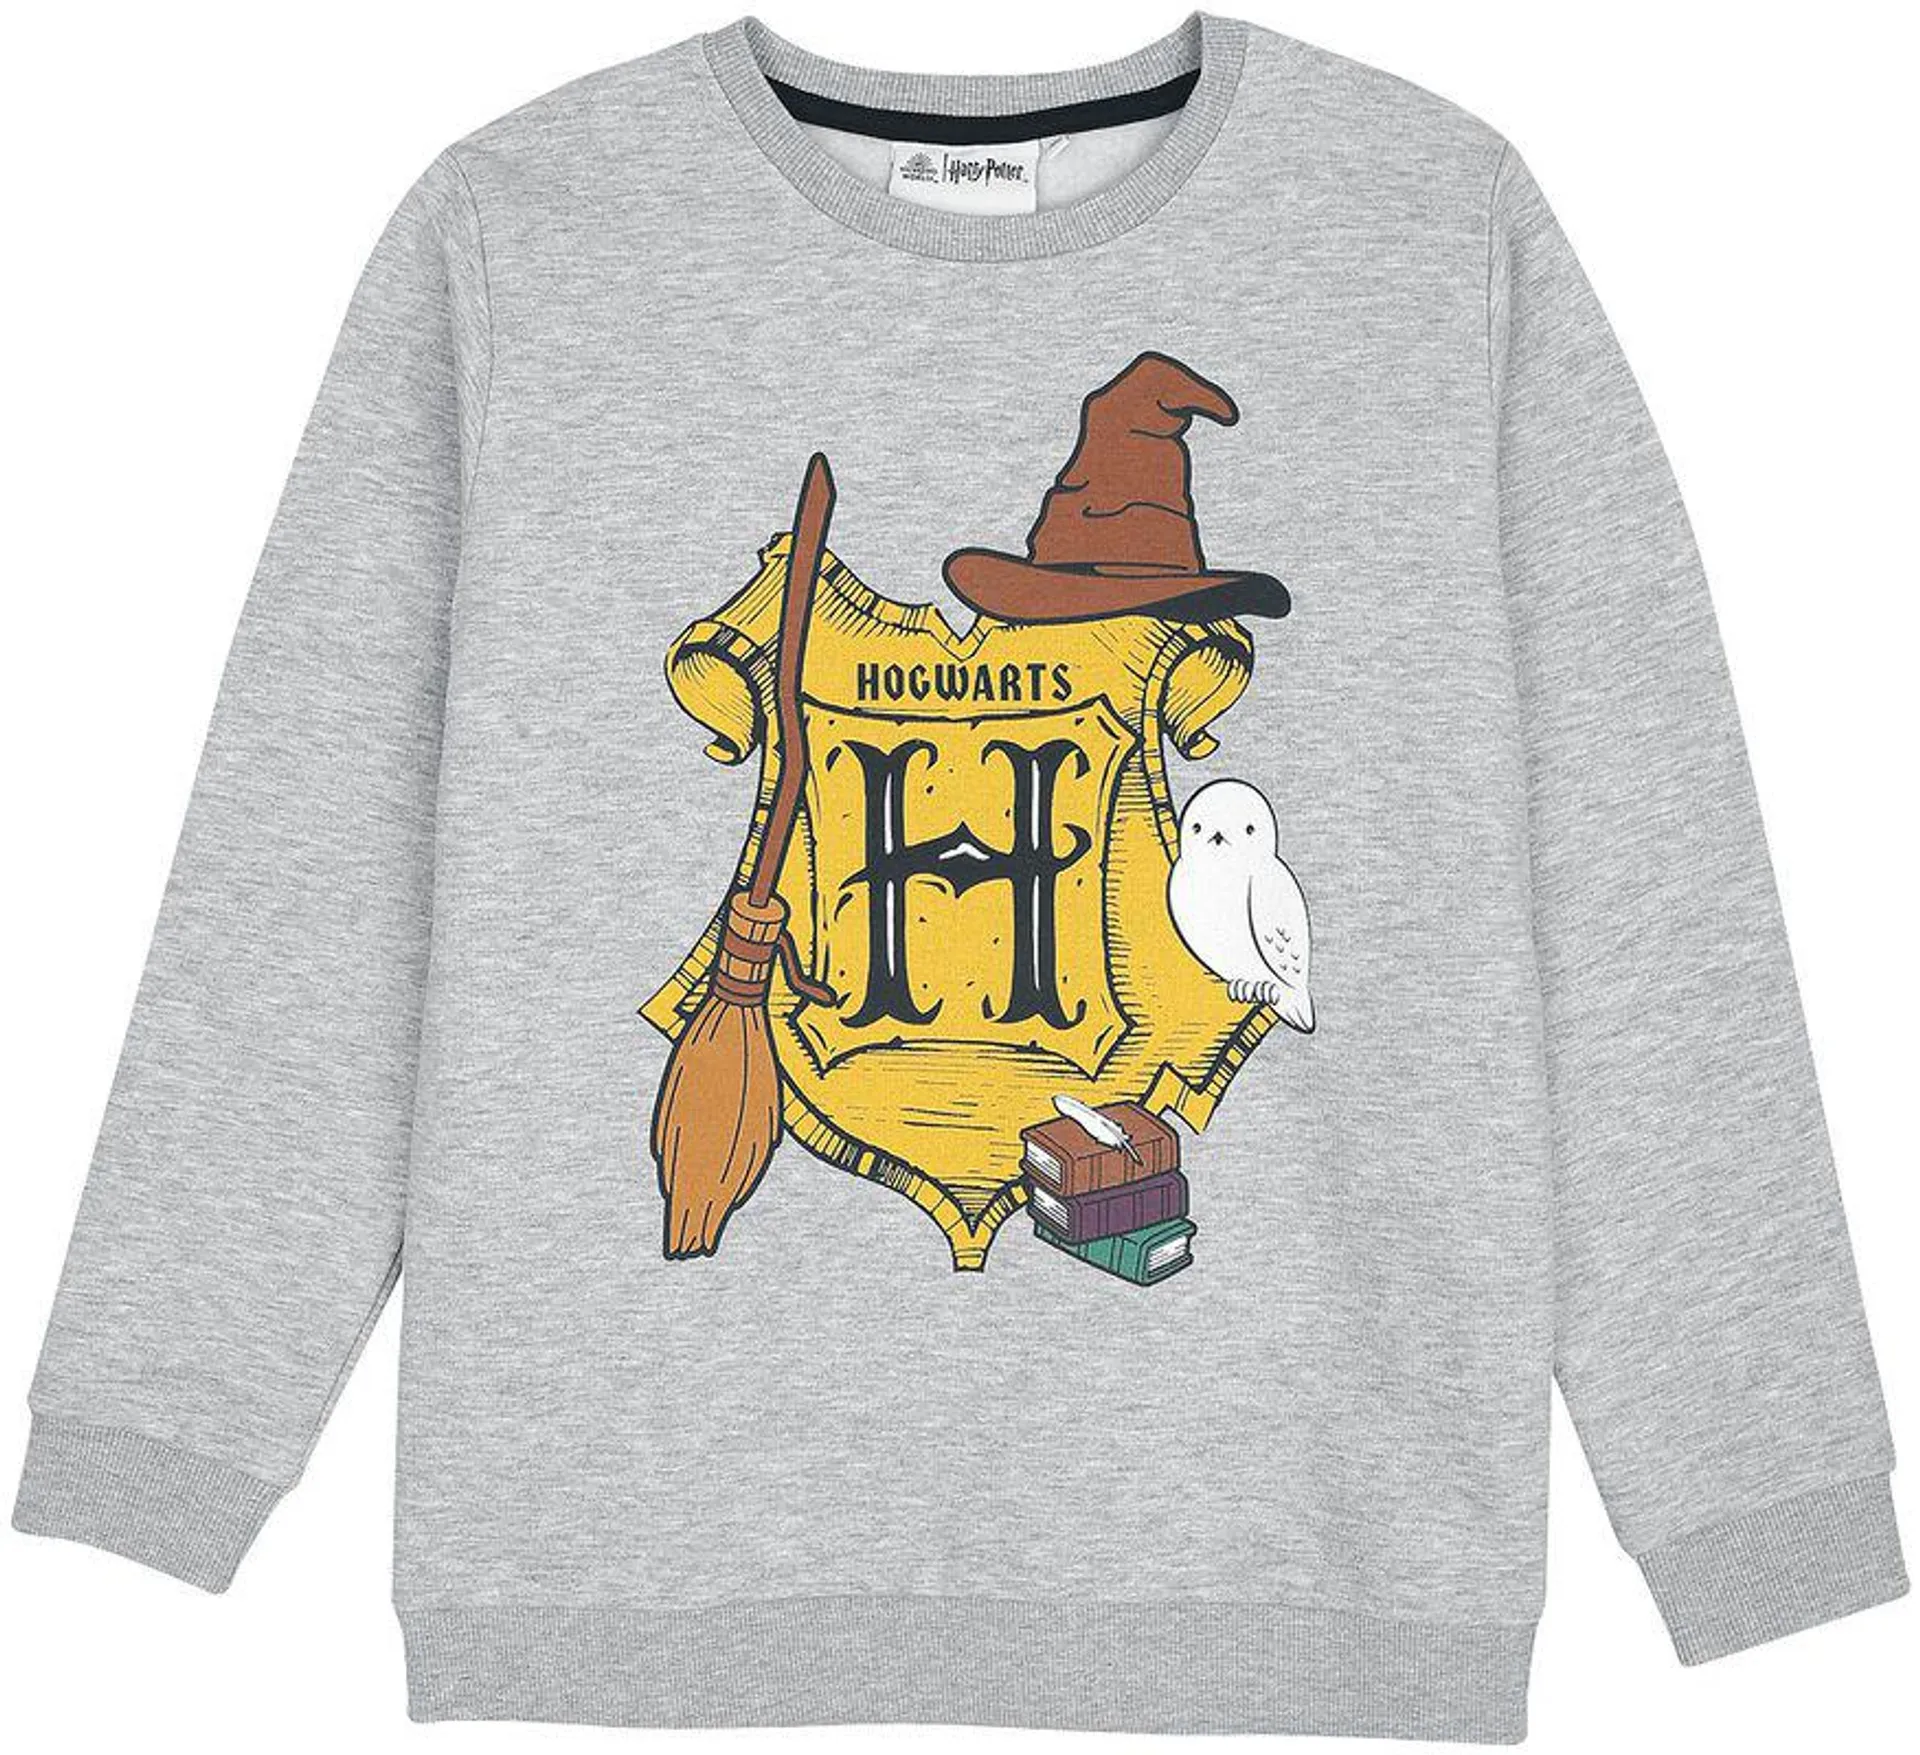 "Kids - Hogwarts" Sudadera Gris de Harry Potter